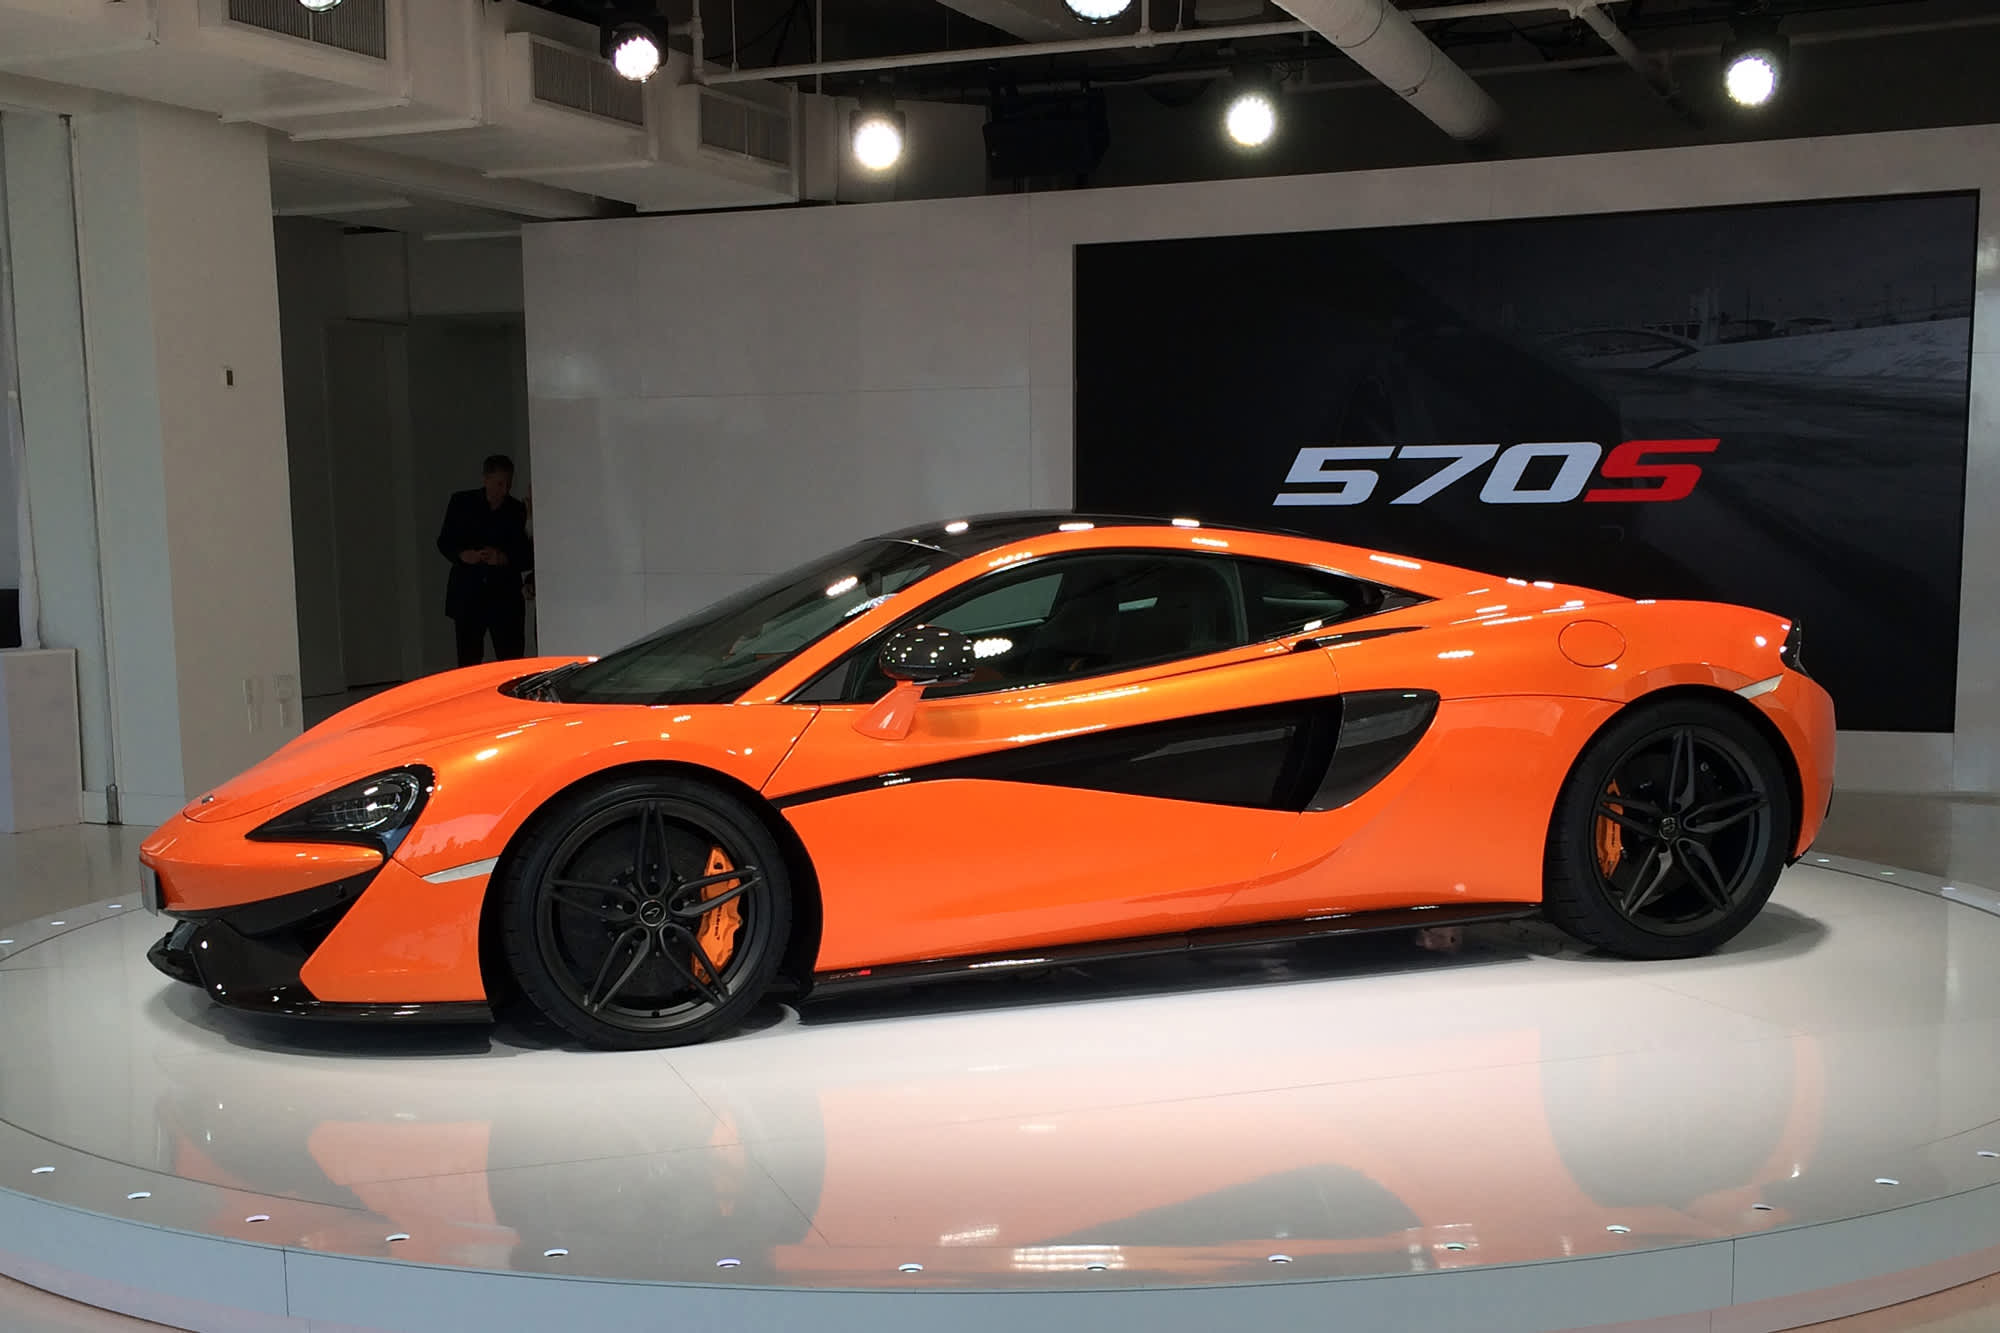 McLaren's big bet: The 570S coupe